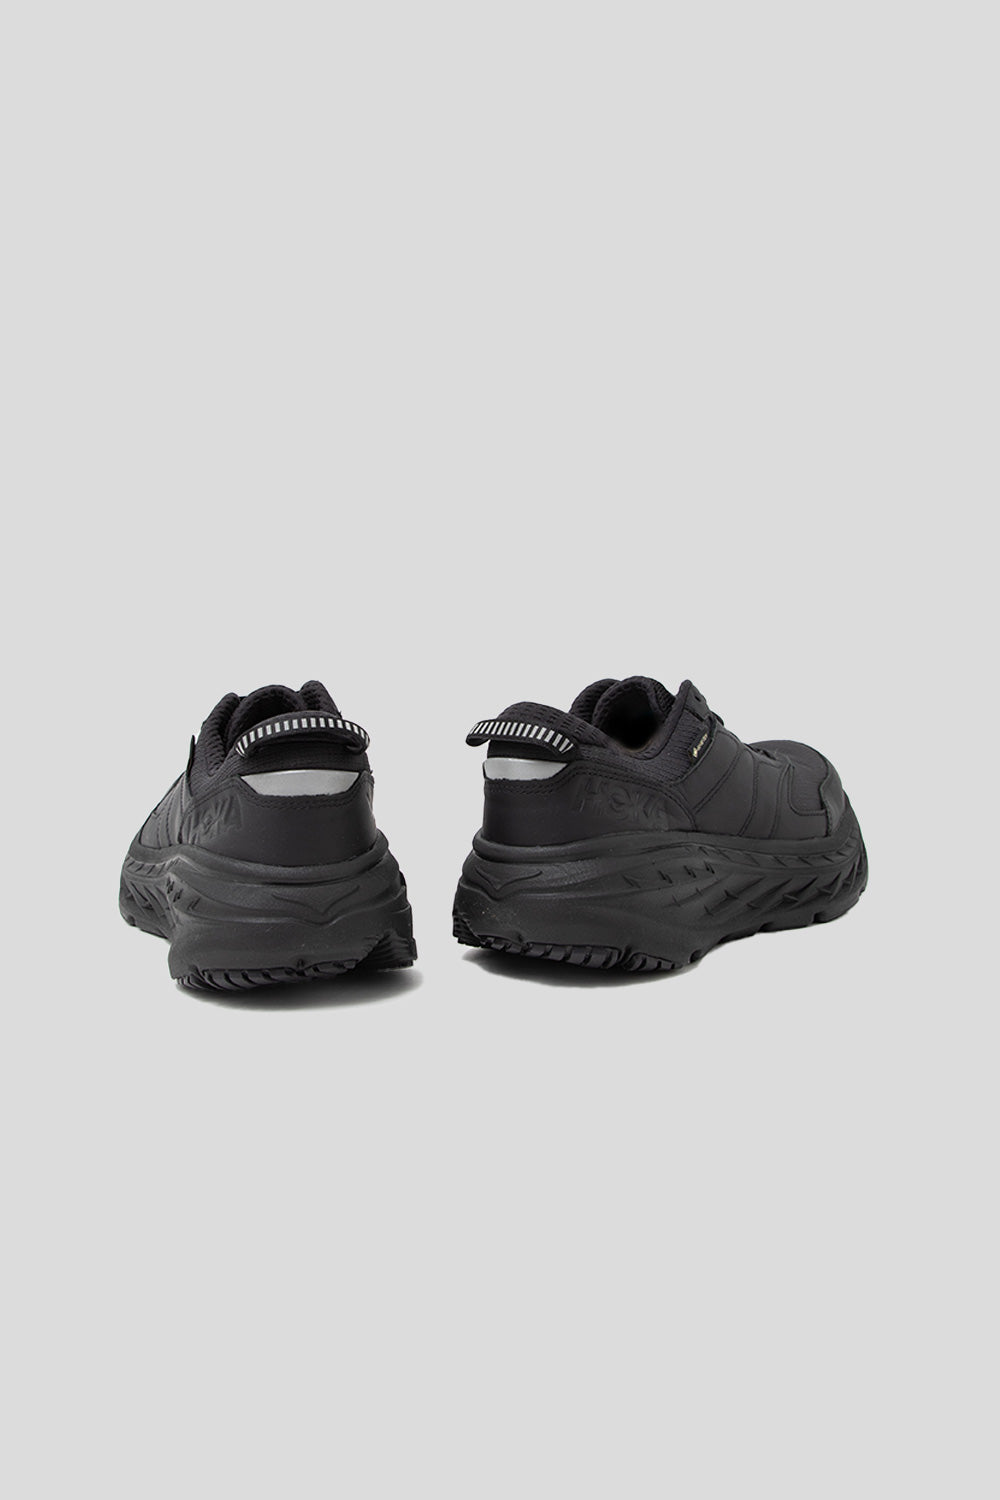 Hoka Bondi L GTX Shoe in Black / Black